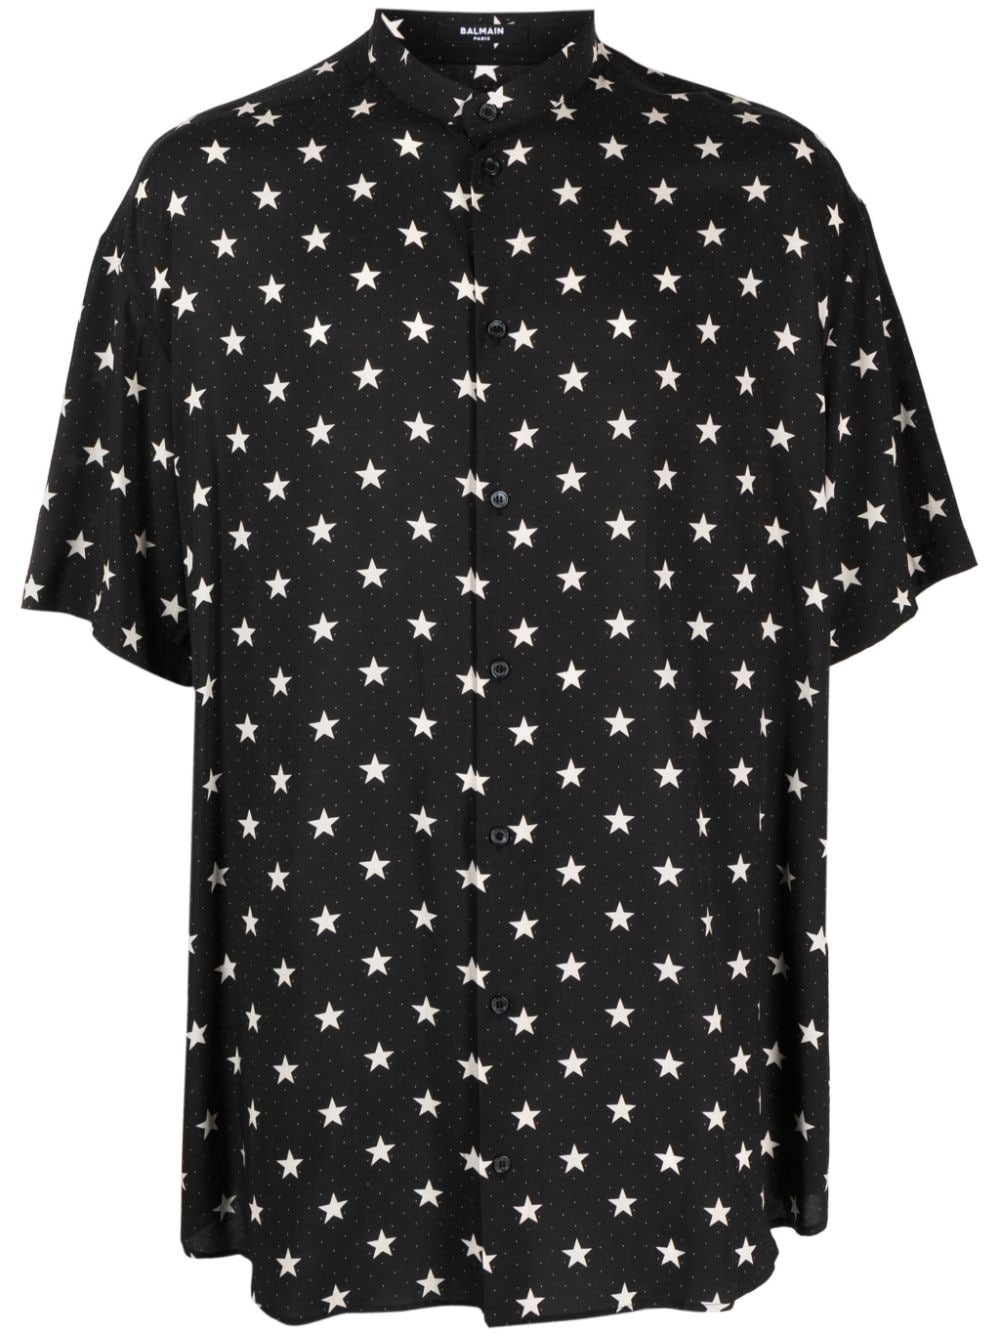 Shirt with stars